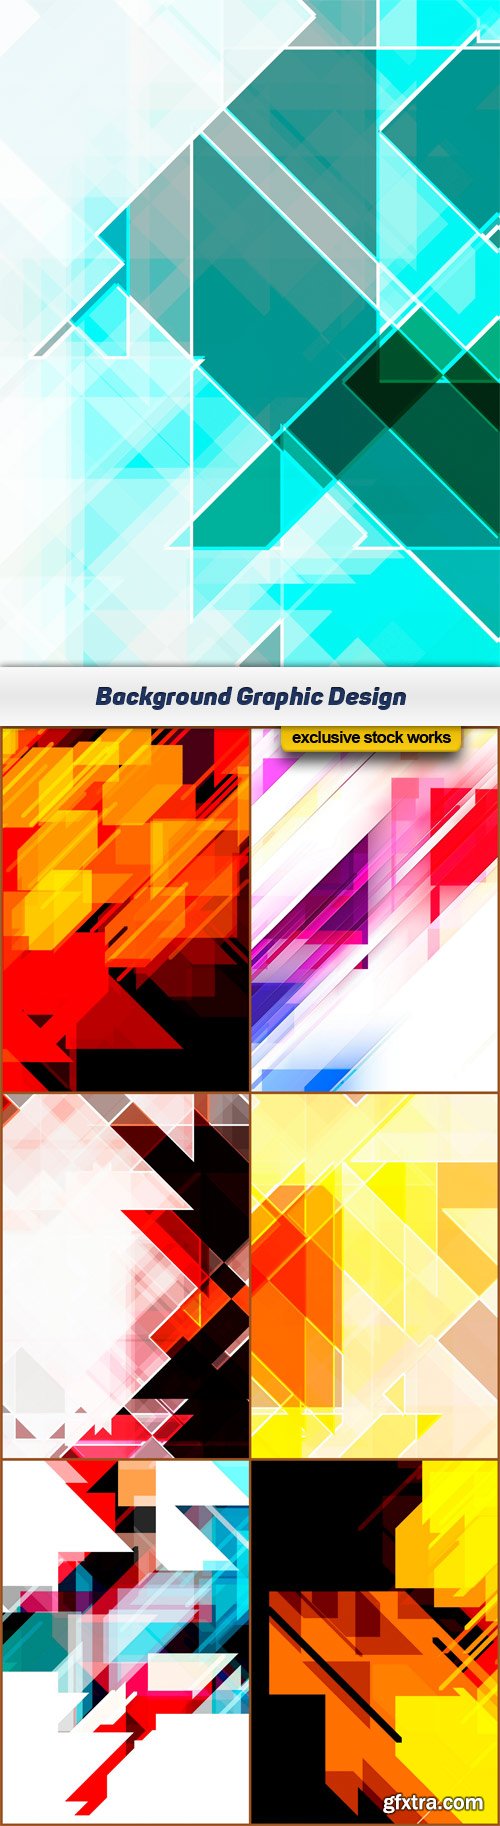 Background Graphic Design 7x JPEG